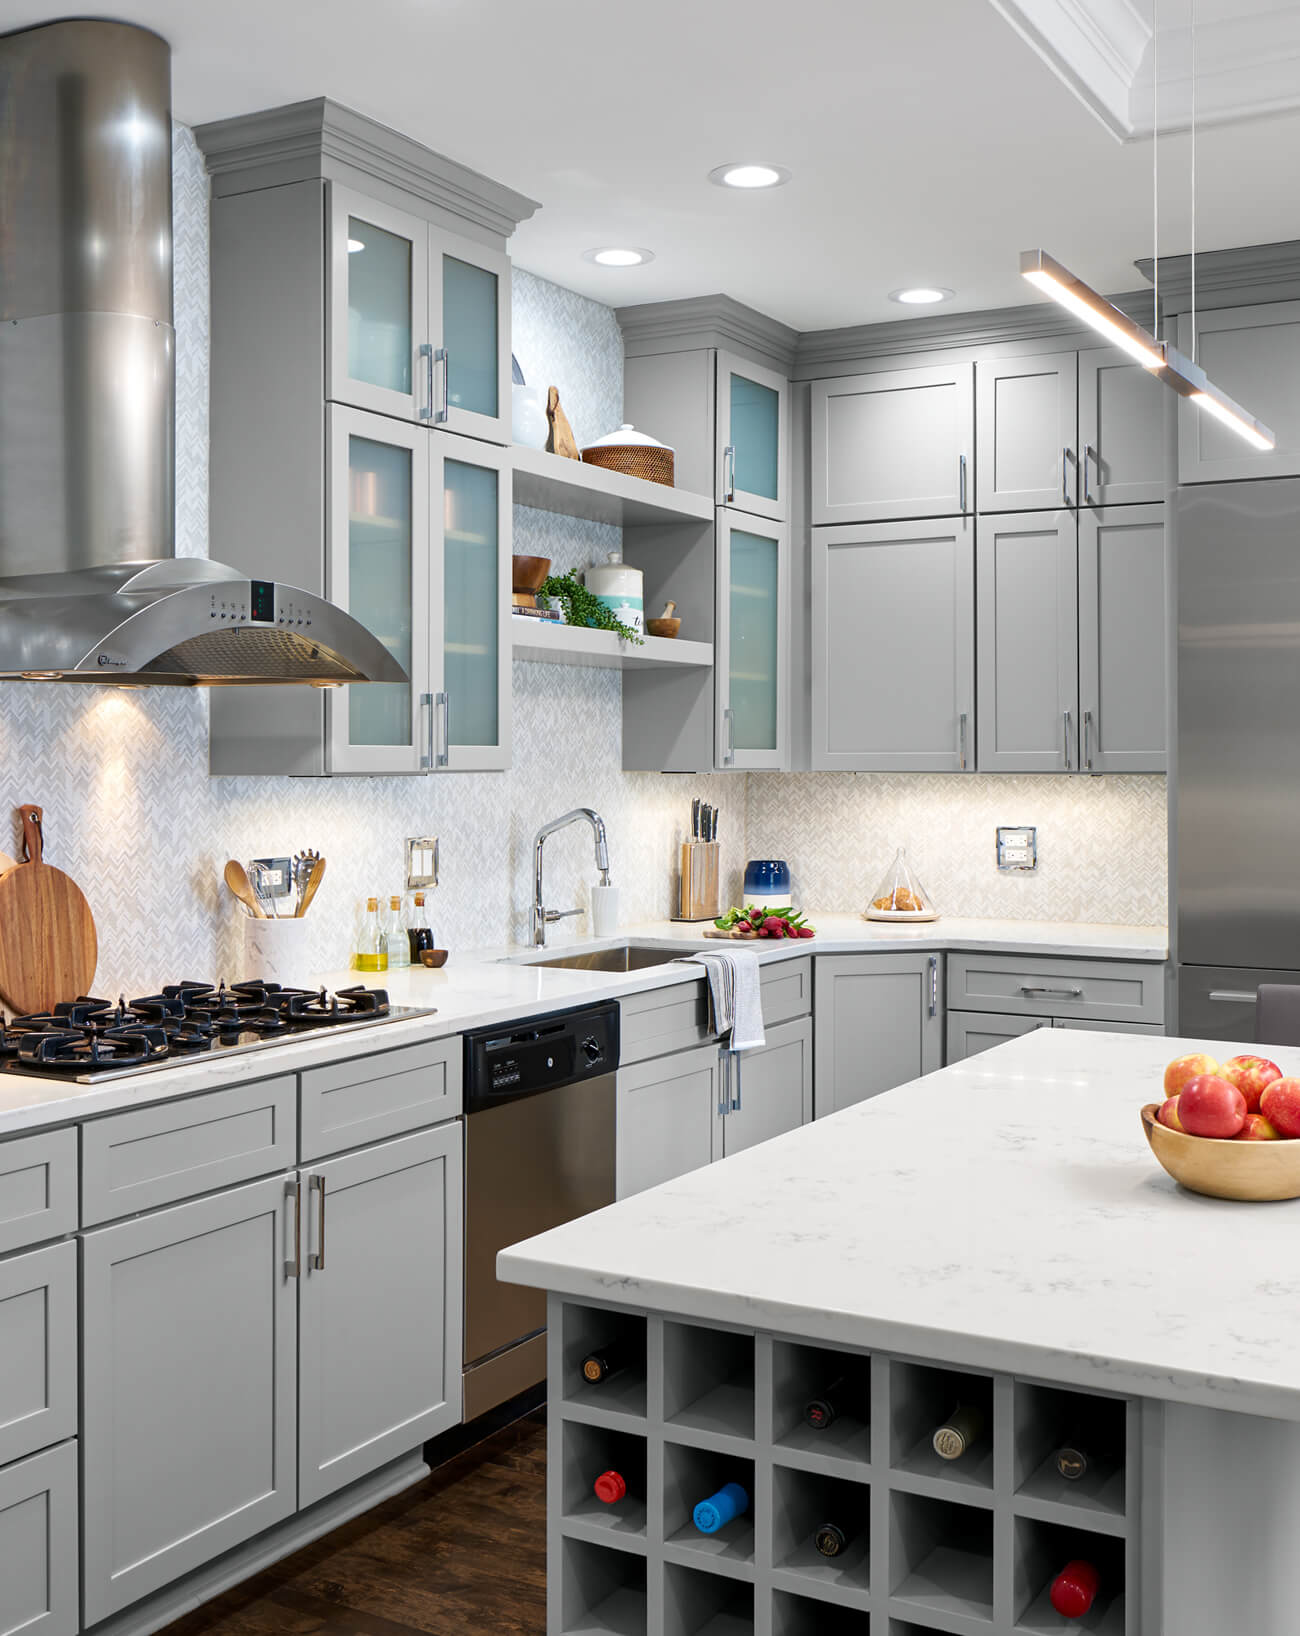 White and Blue Accent Kitchen Design